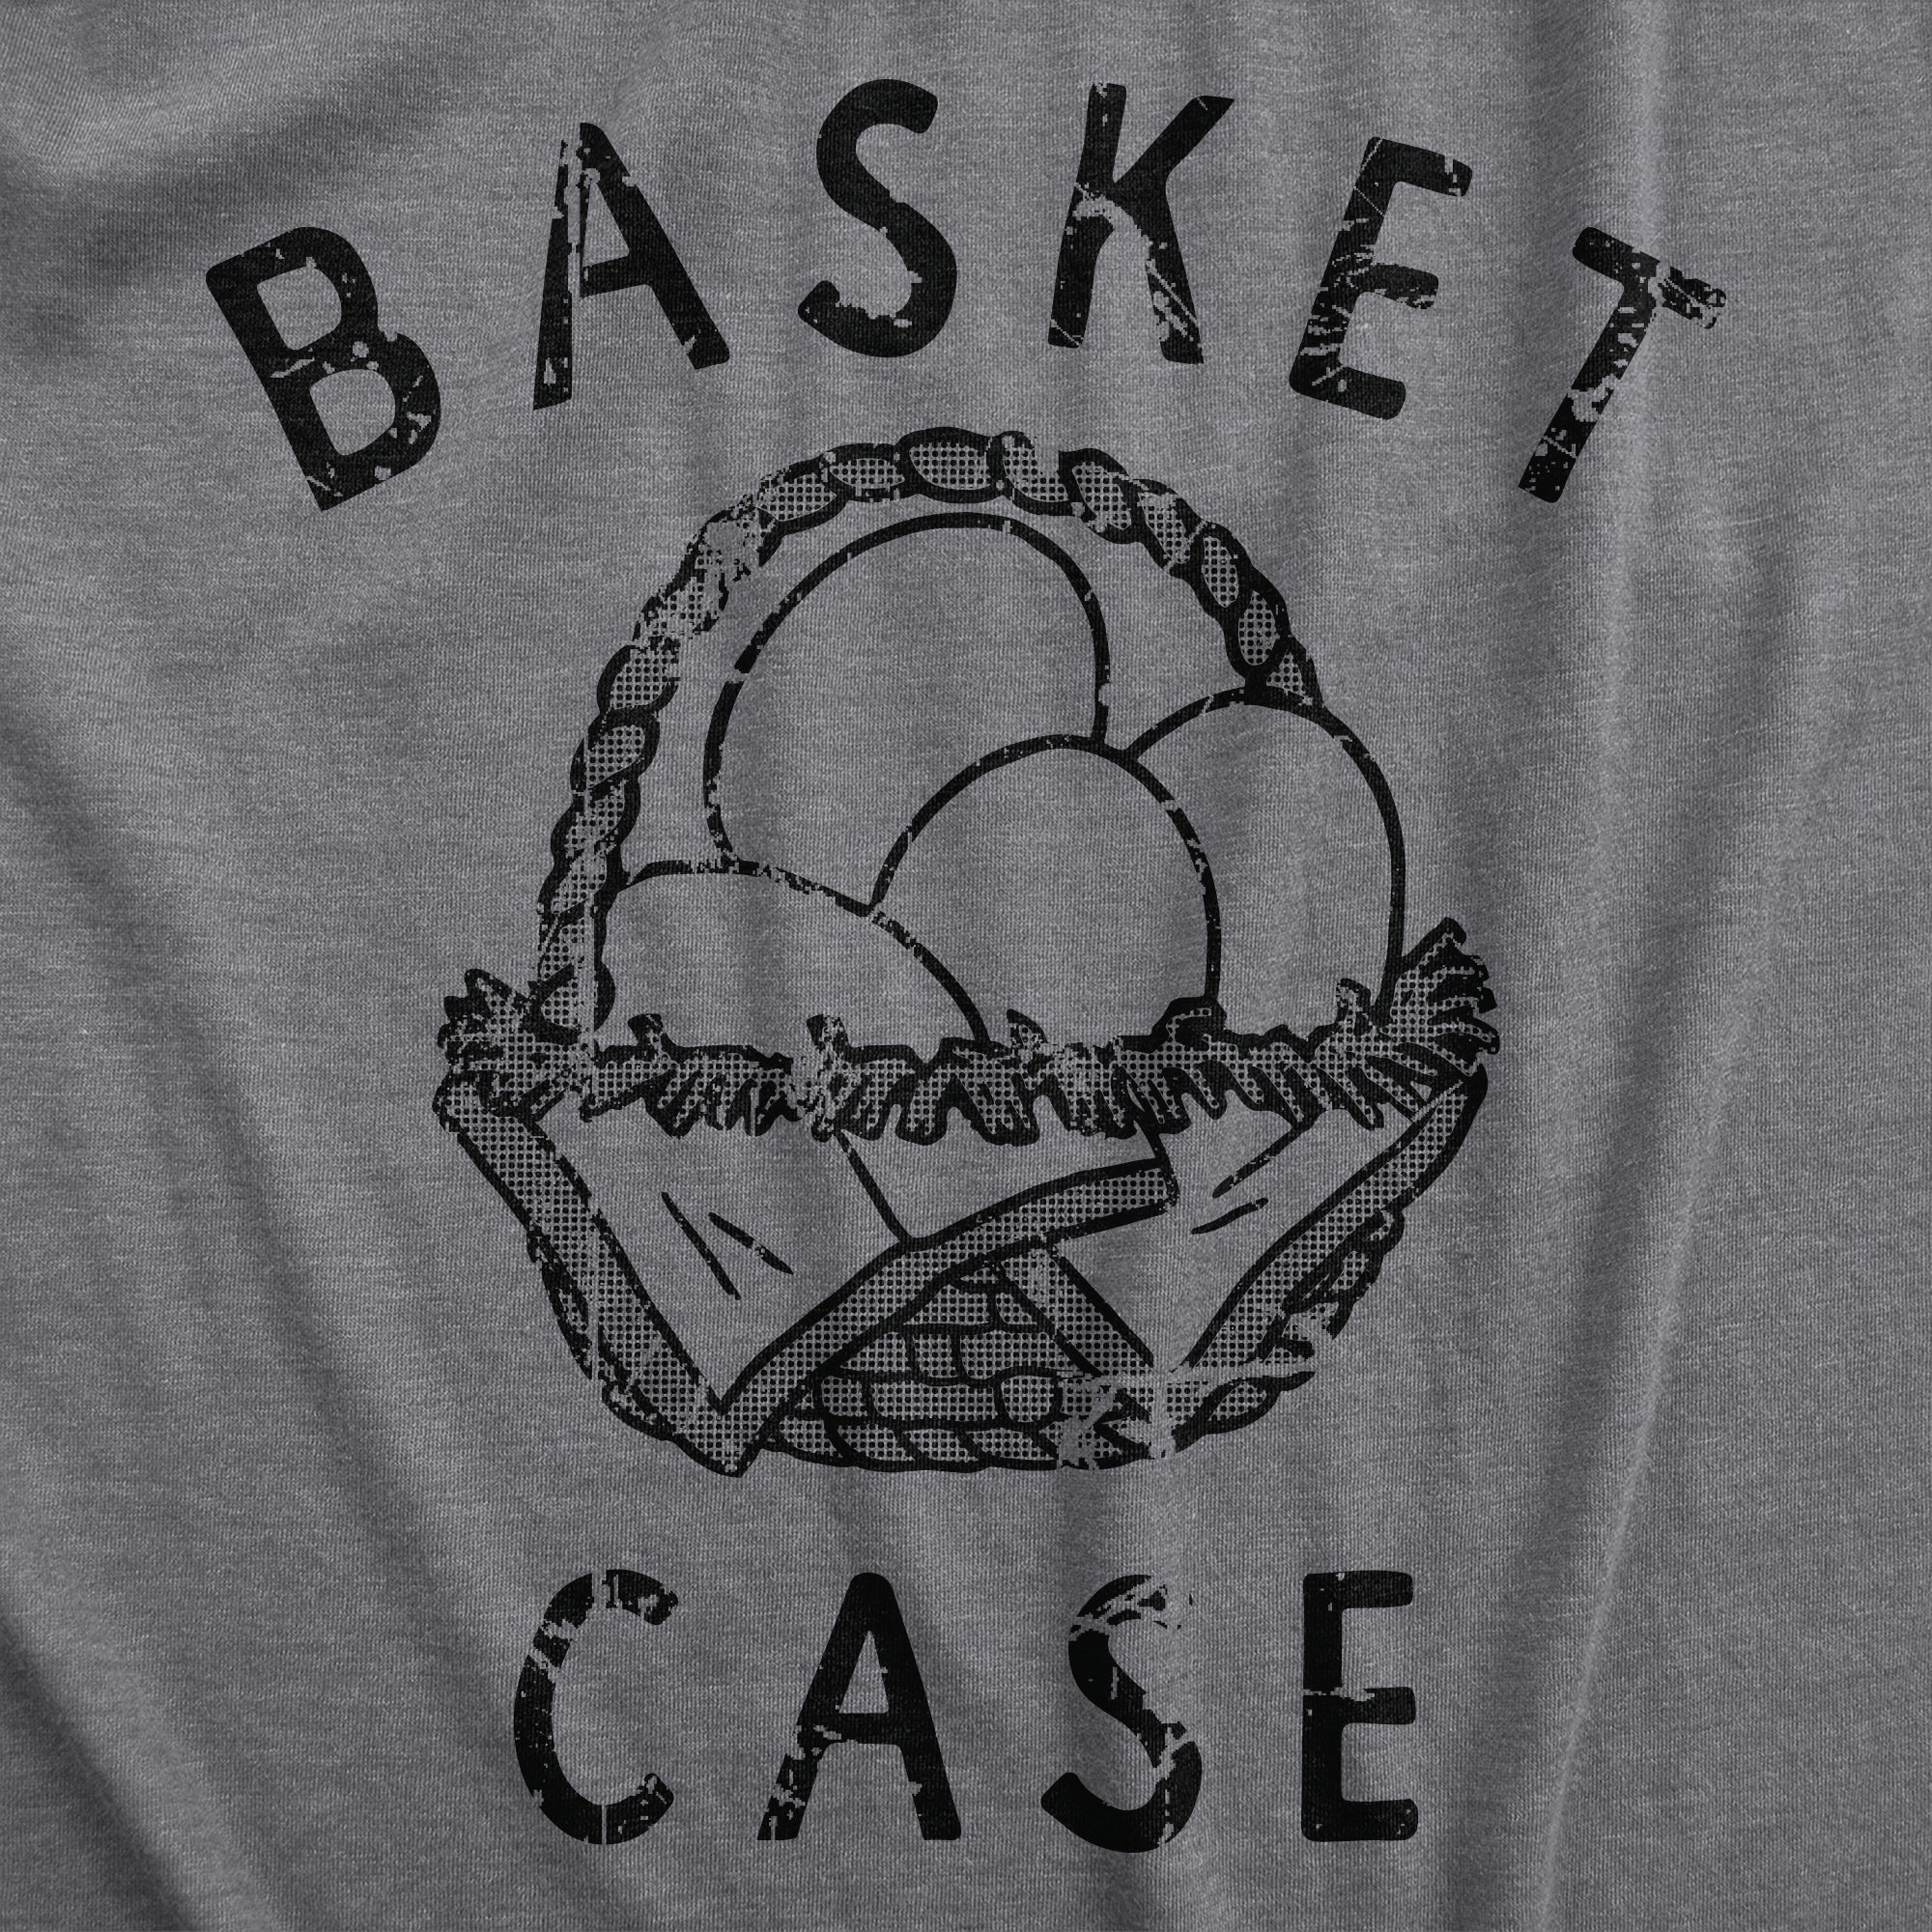 Funny Dark Heather Grey - BASKET Basket Case Womens T Shirt Nerdy Easter Sarcastic Tee